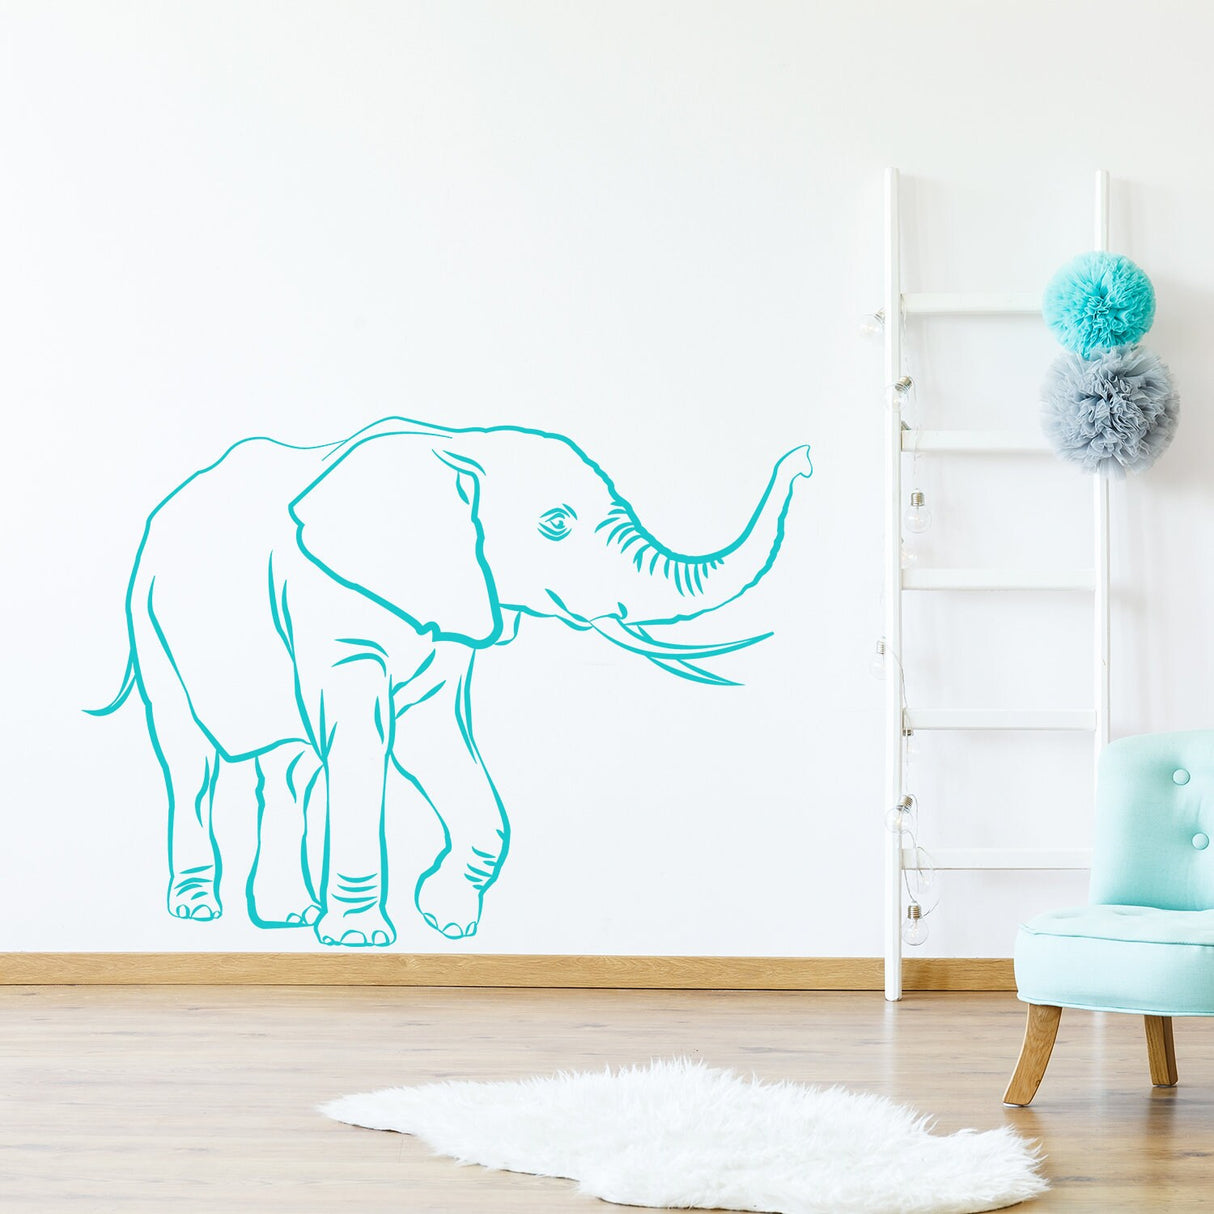 Elephant Stickers - Cute Vinyl Wall Animal Decal